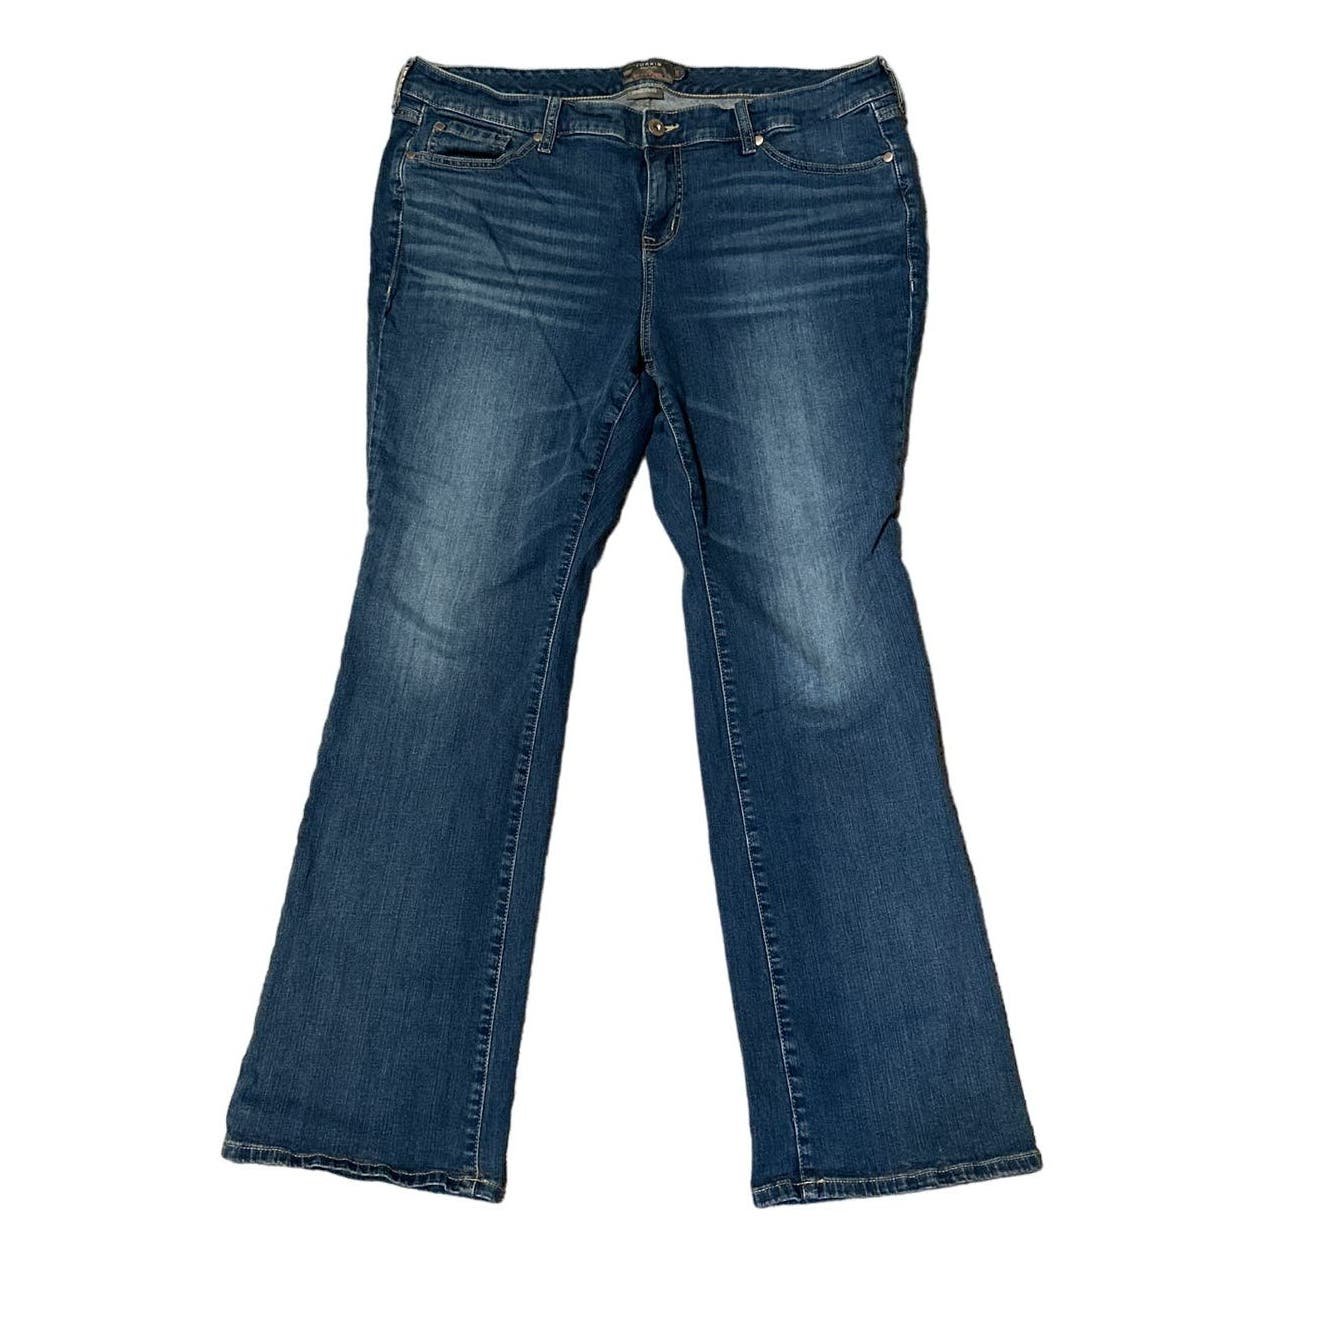 reasonable price Torrid Jeans LiooqV2Cu Hot Sale